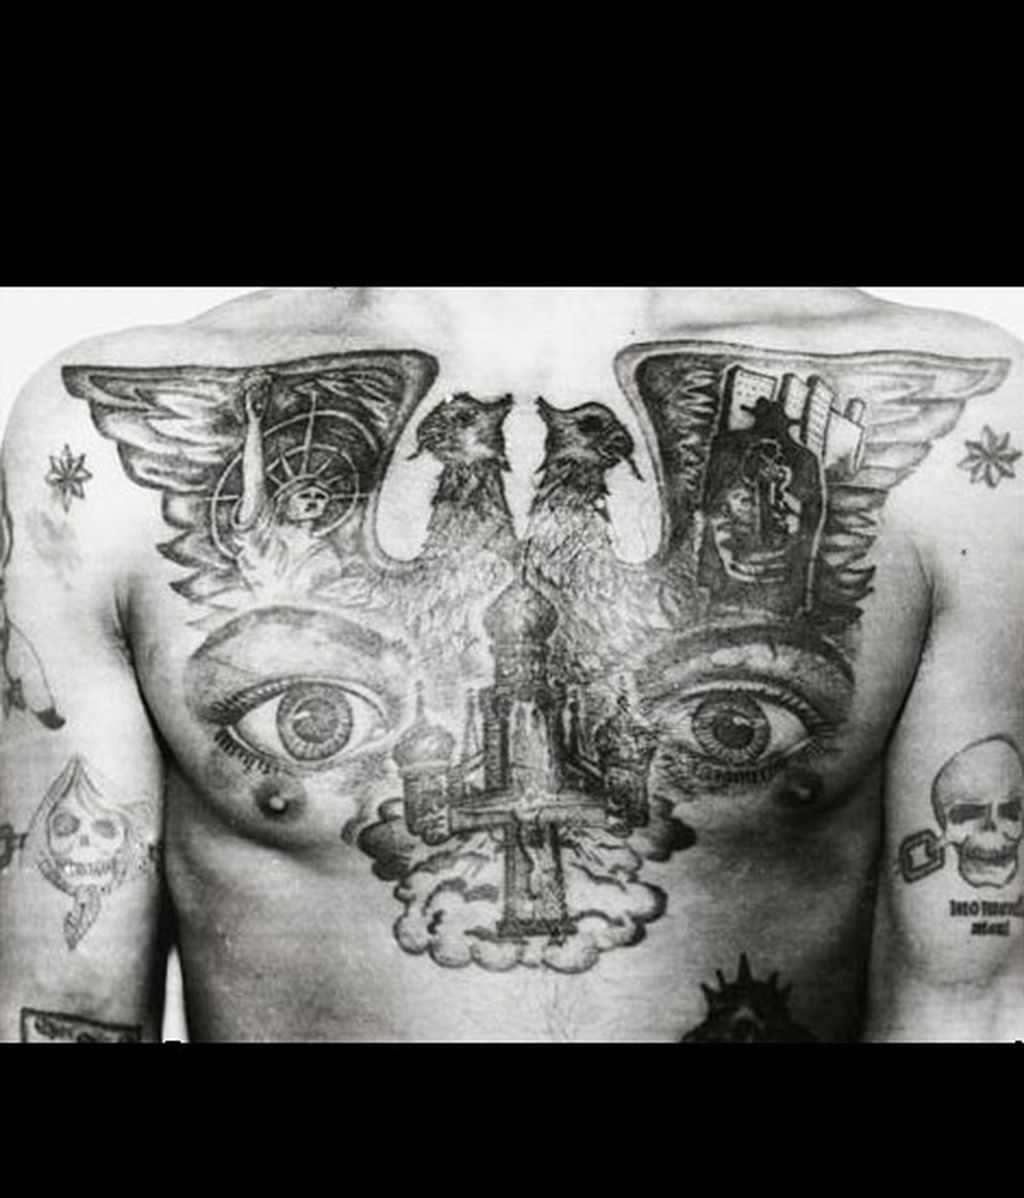 El lenguaje secreto de los tatuajes de los presos